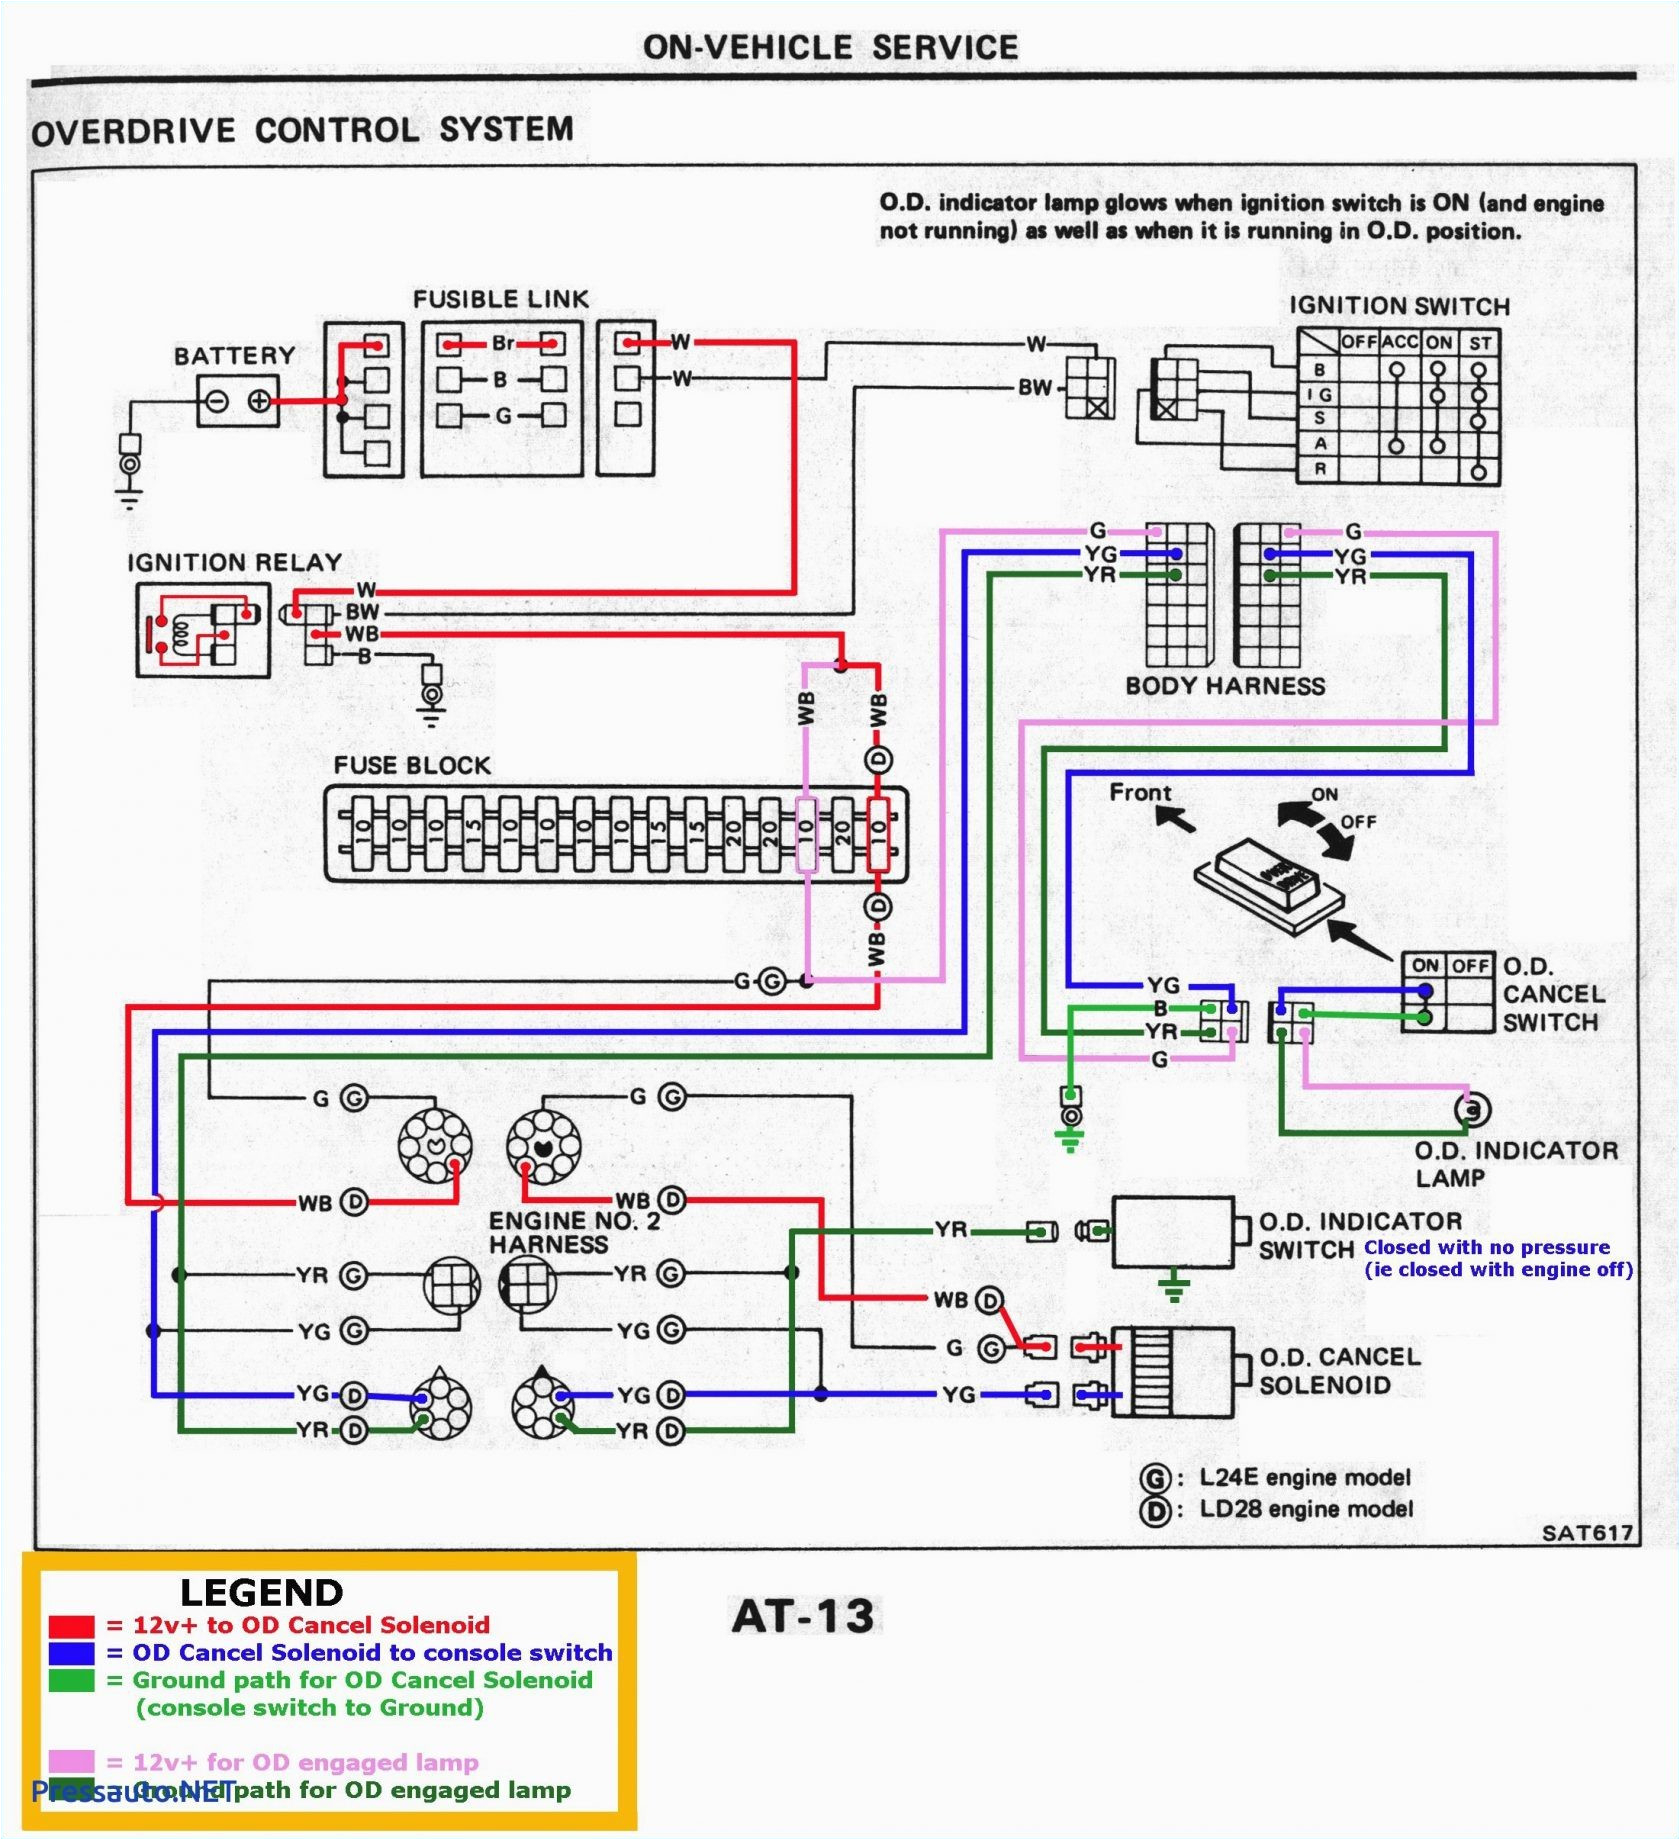 12v circuit diagram coach schema diagram database wire diagram 17 d wiring diagram sheet 12v circuit